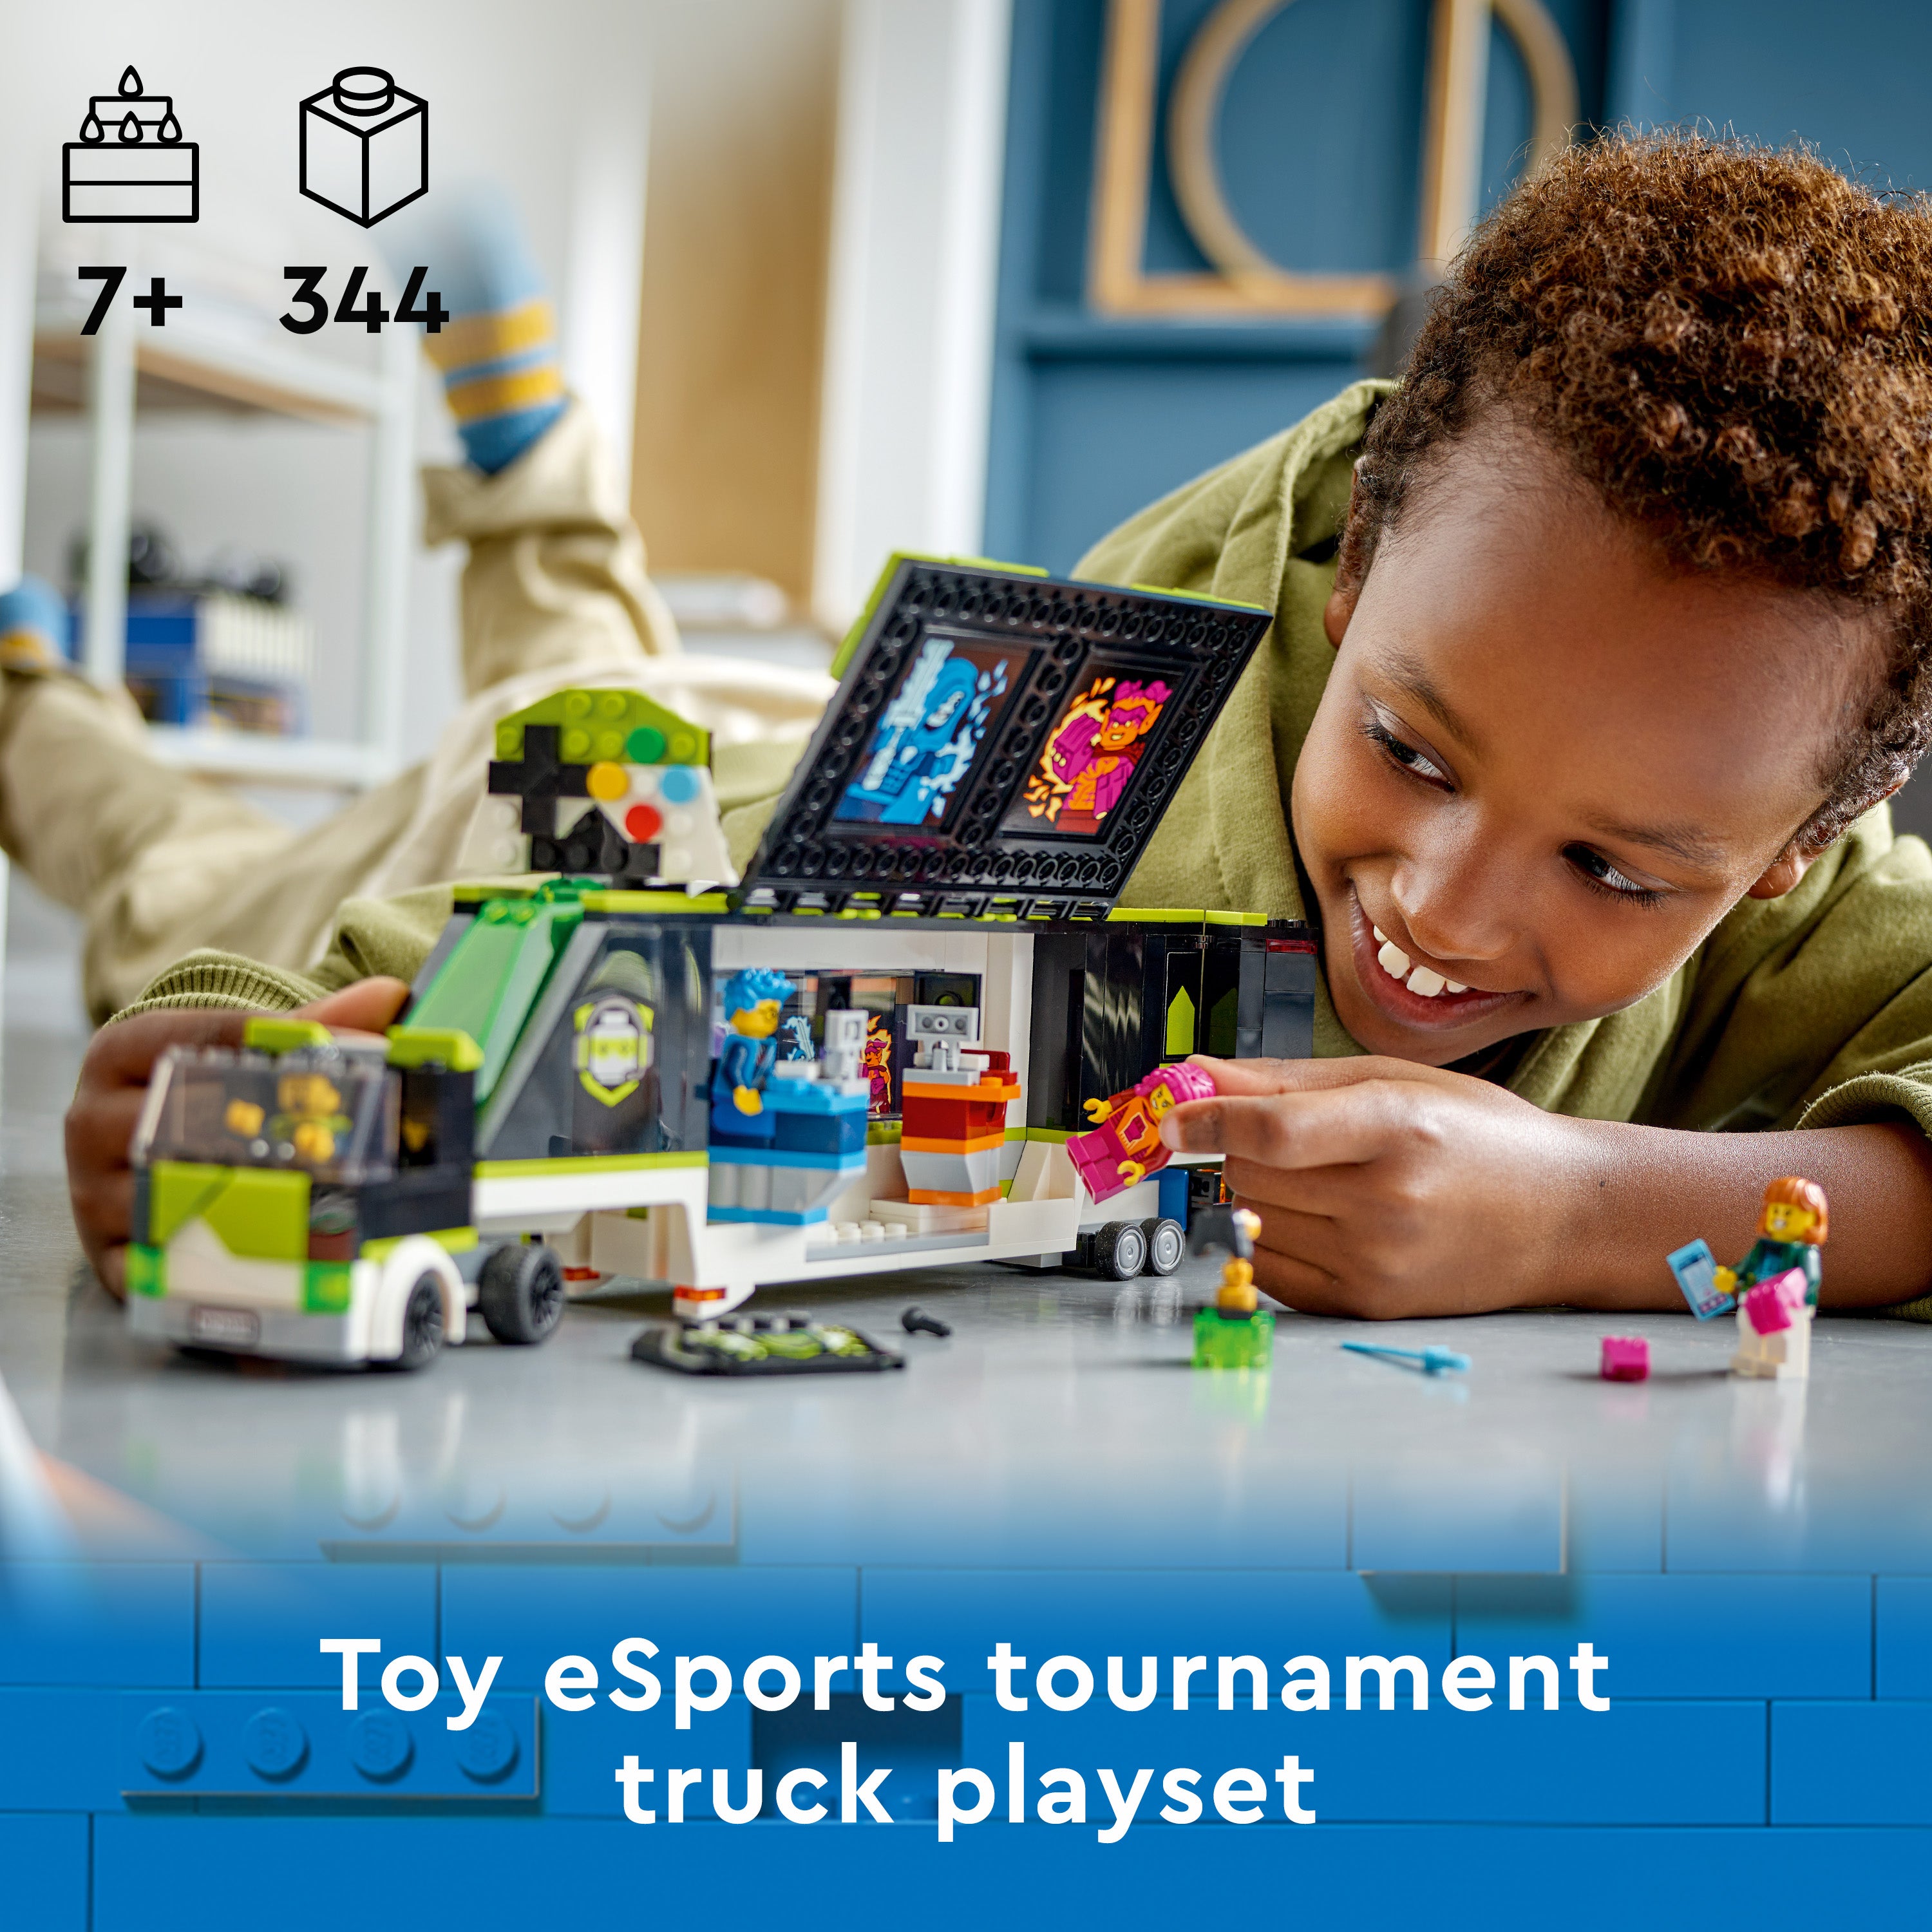 Lego 60388 Gaming Tournament Truck